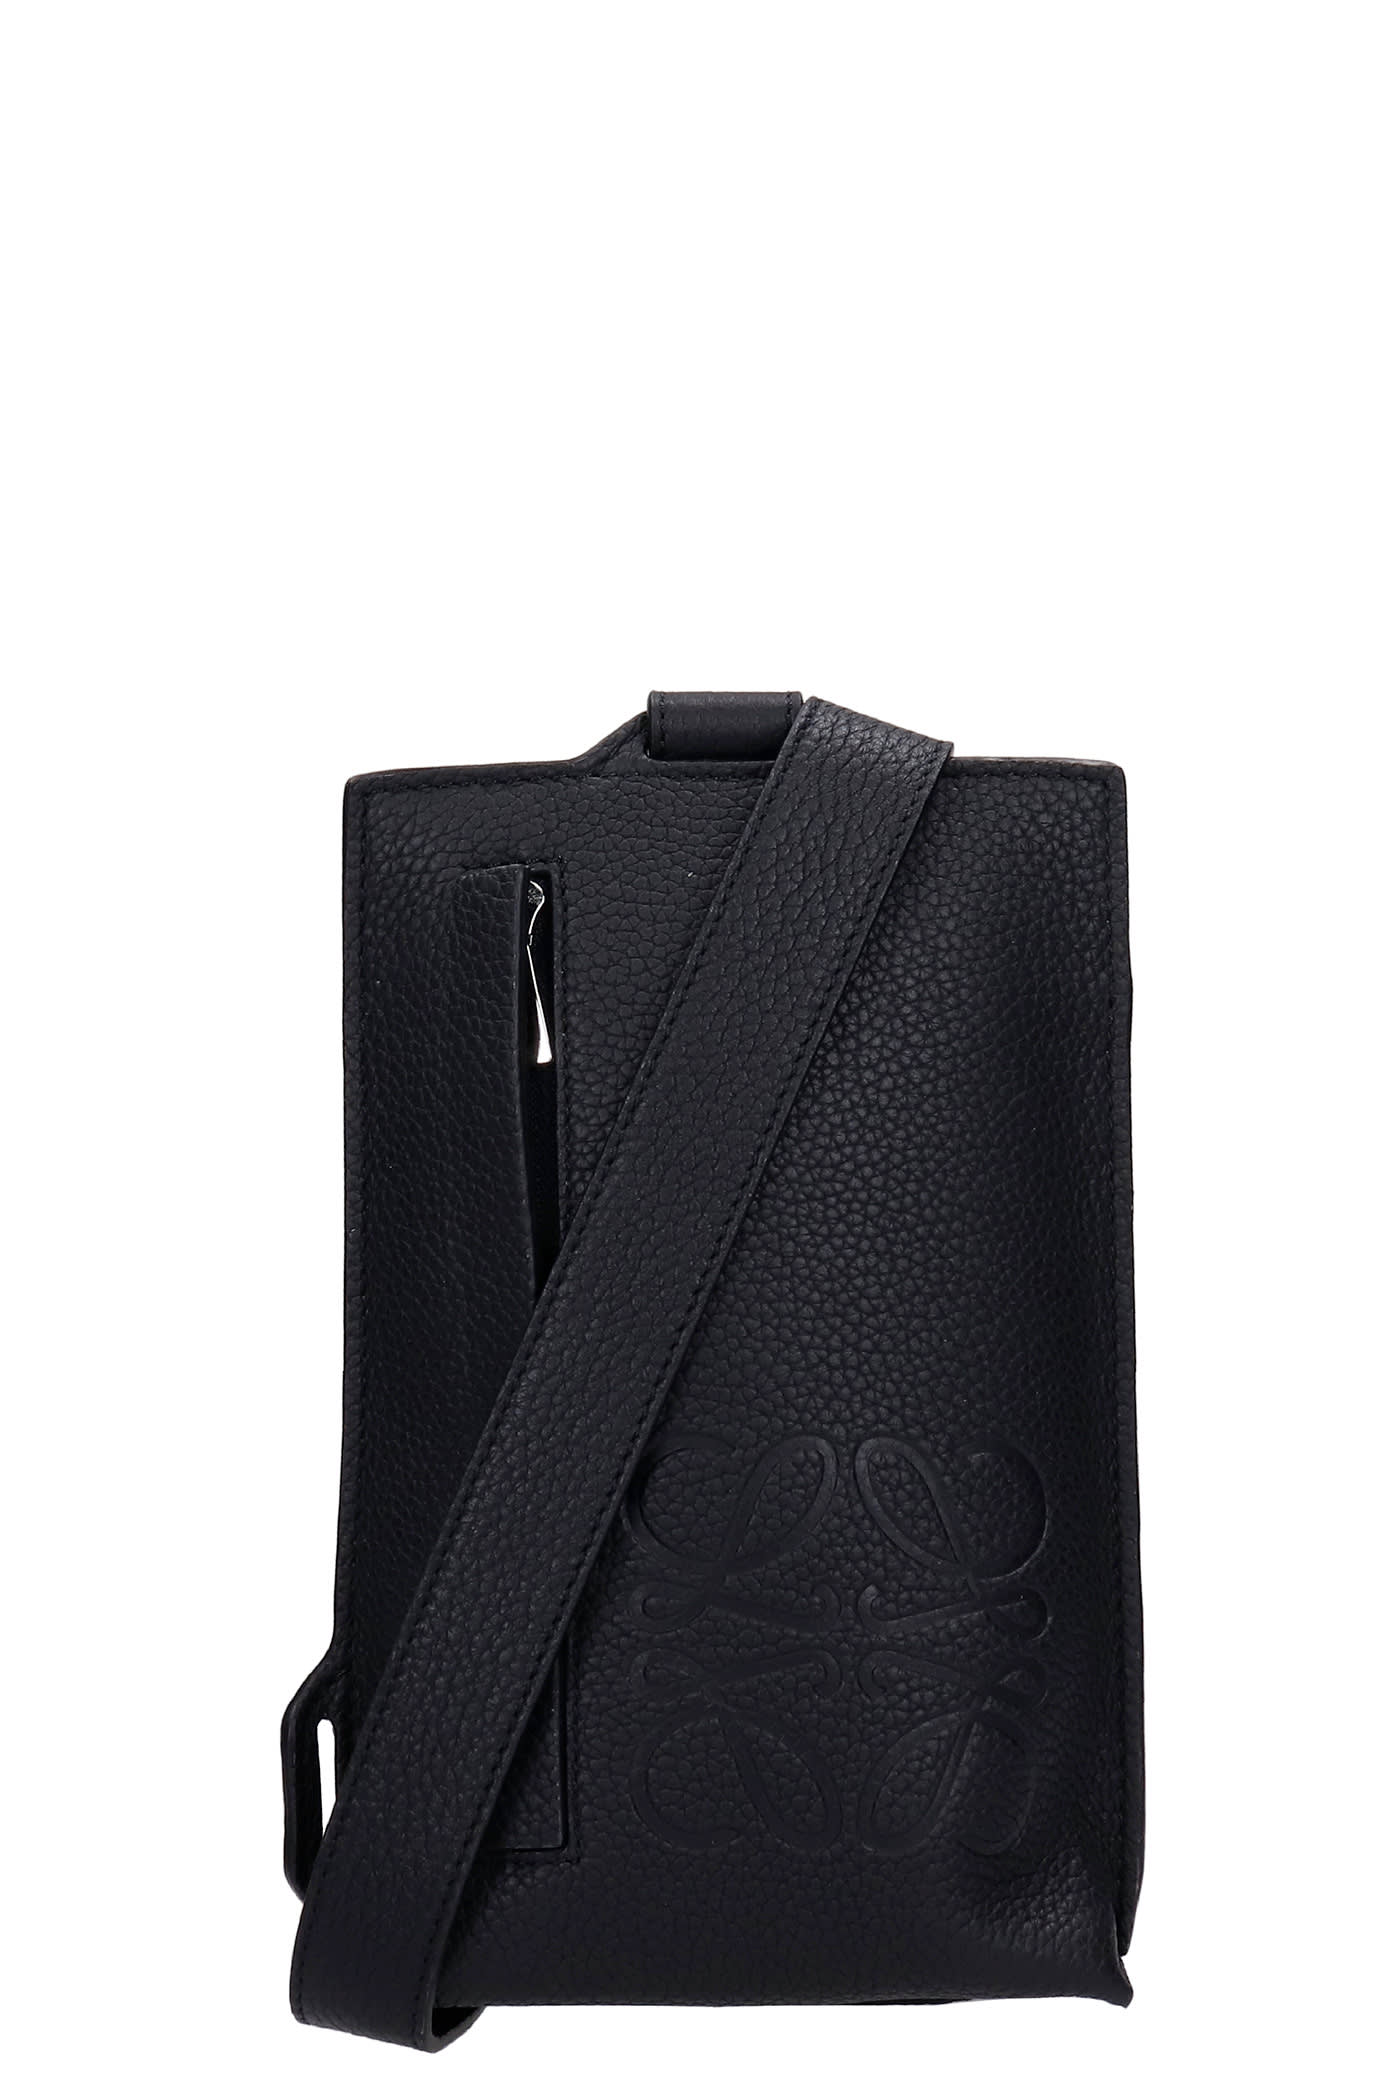 Loewe Vertical T Shoulder Bag In Black Leather